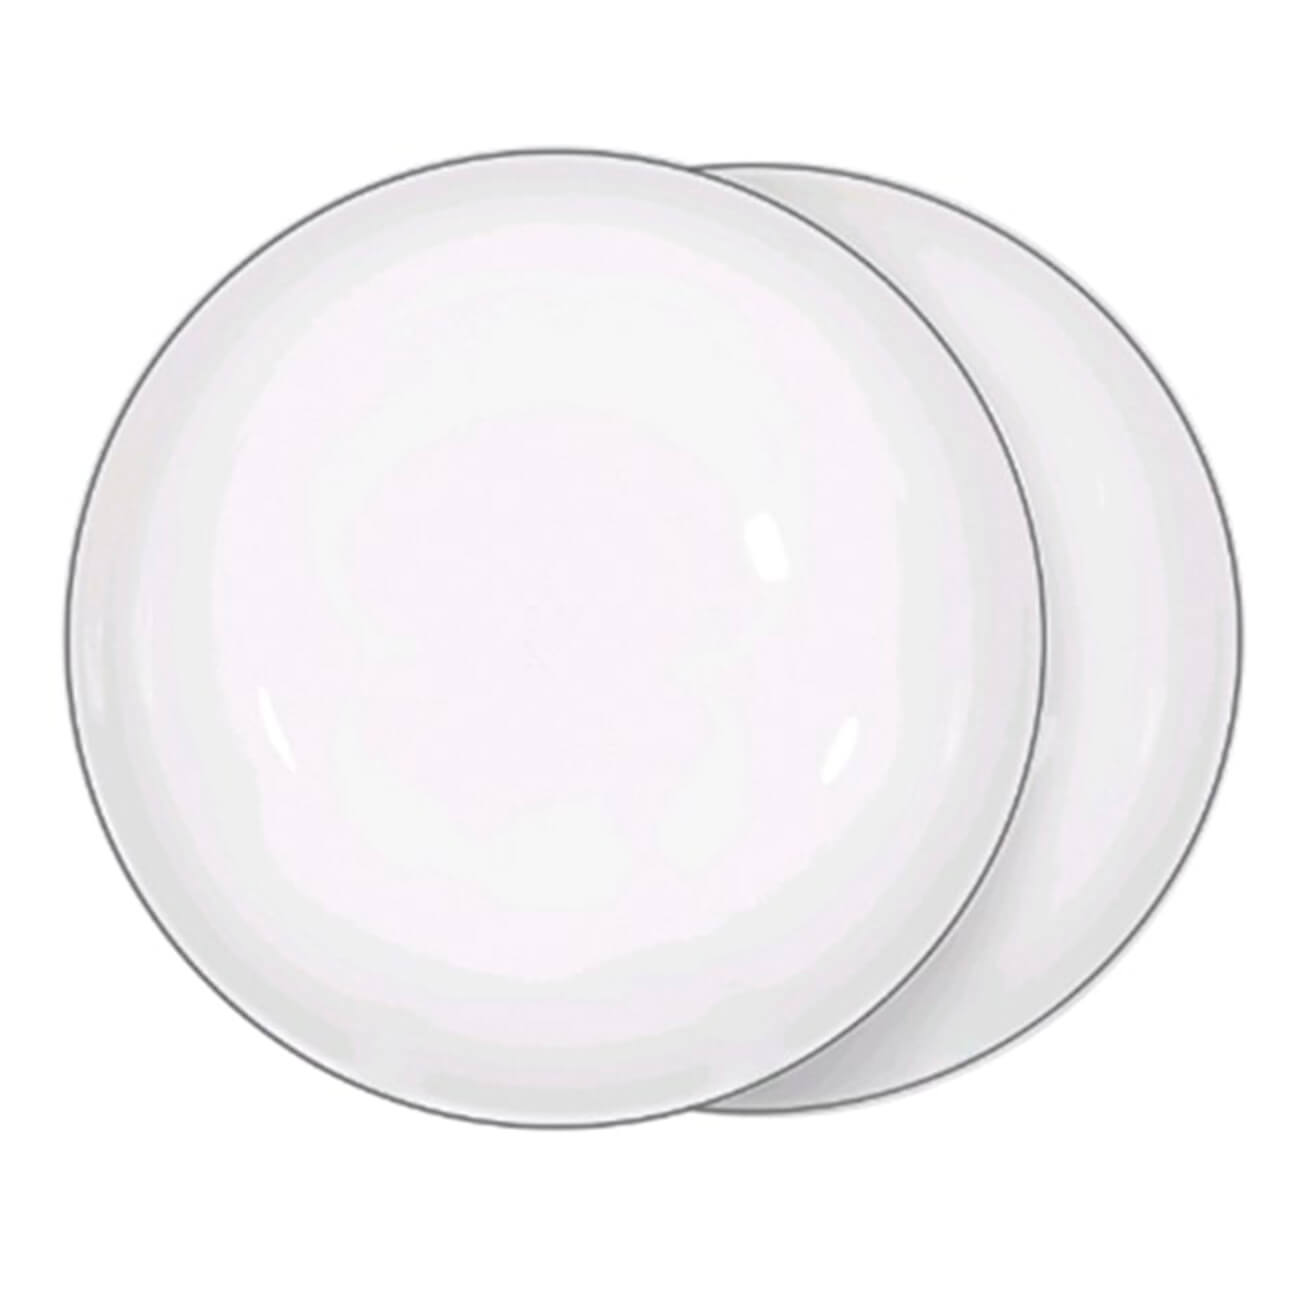 Тарелка суповая, 20х5 см, 2 шт, фарфор F, белая, Ideal silver тарелка dudson камелот 22 9 см